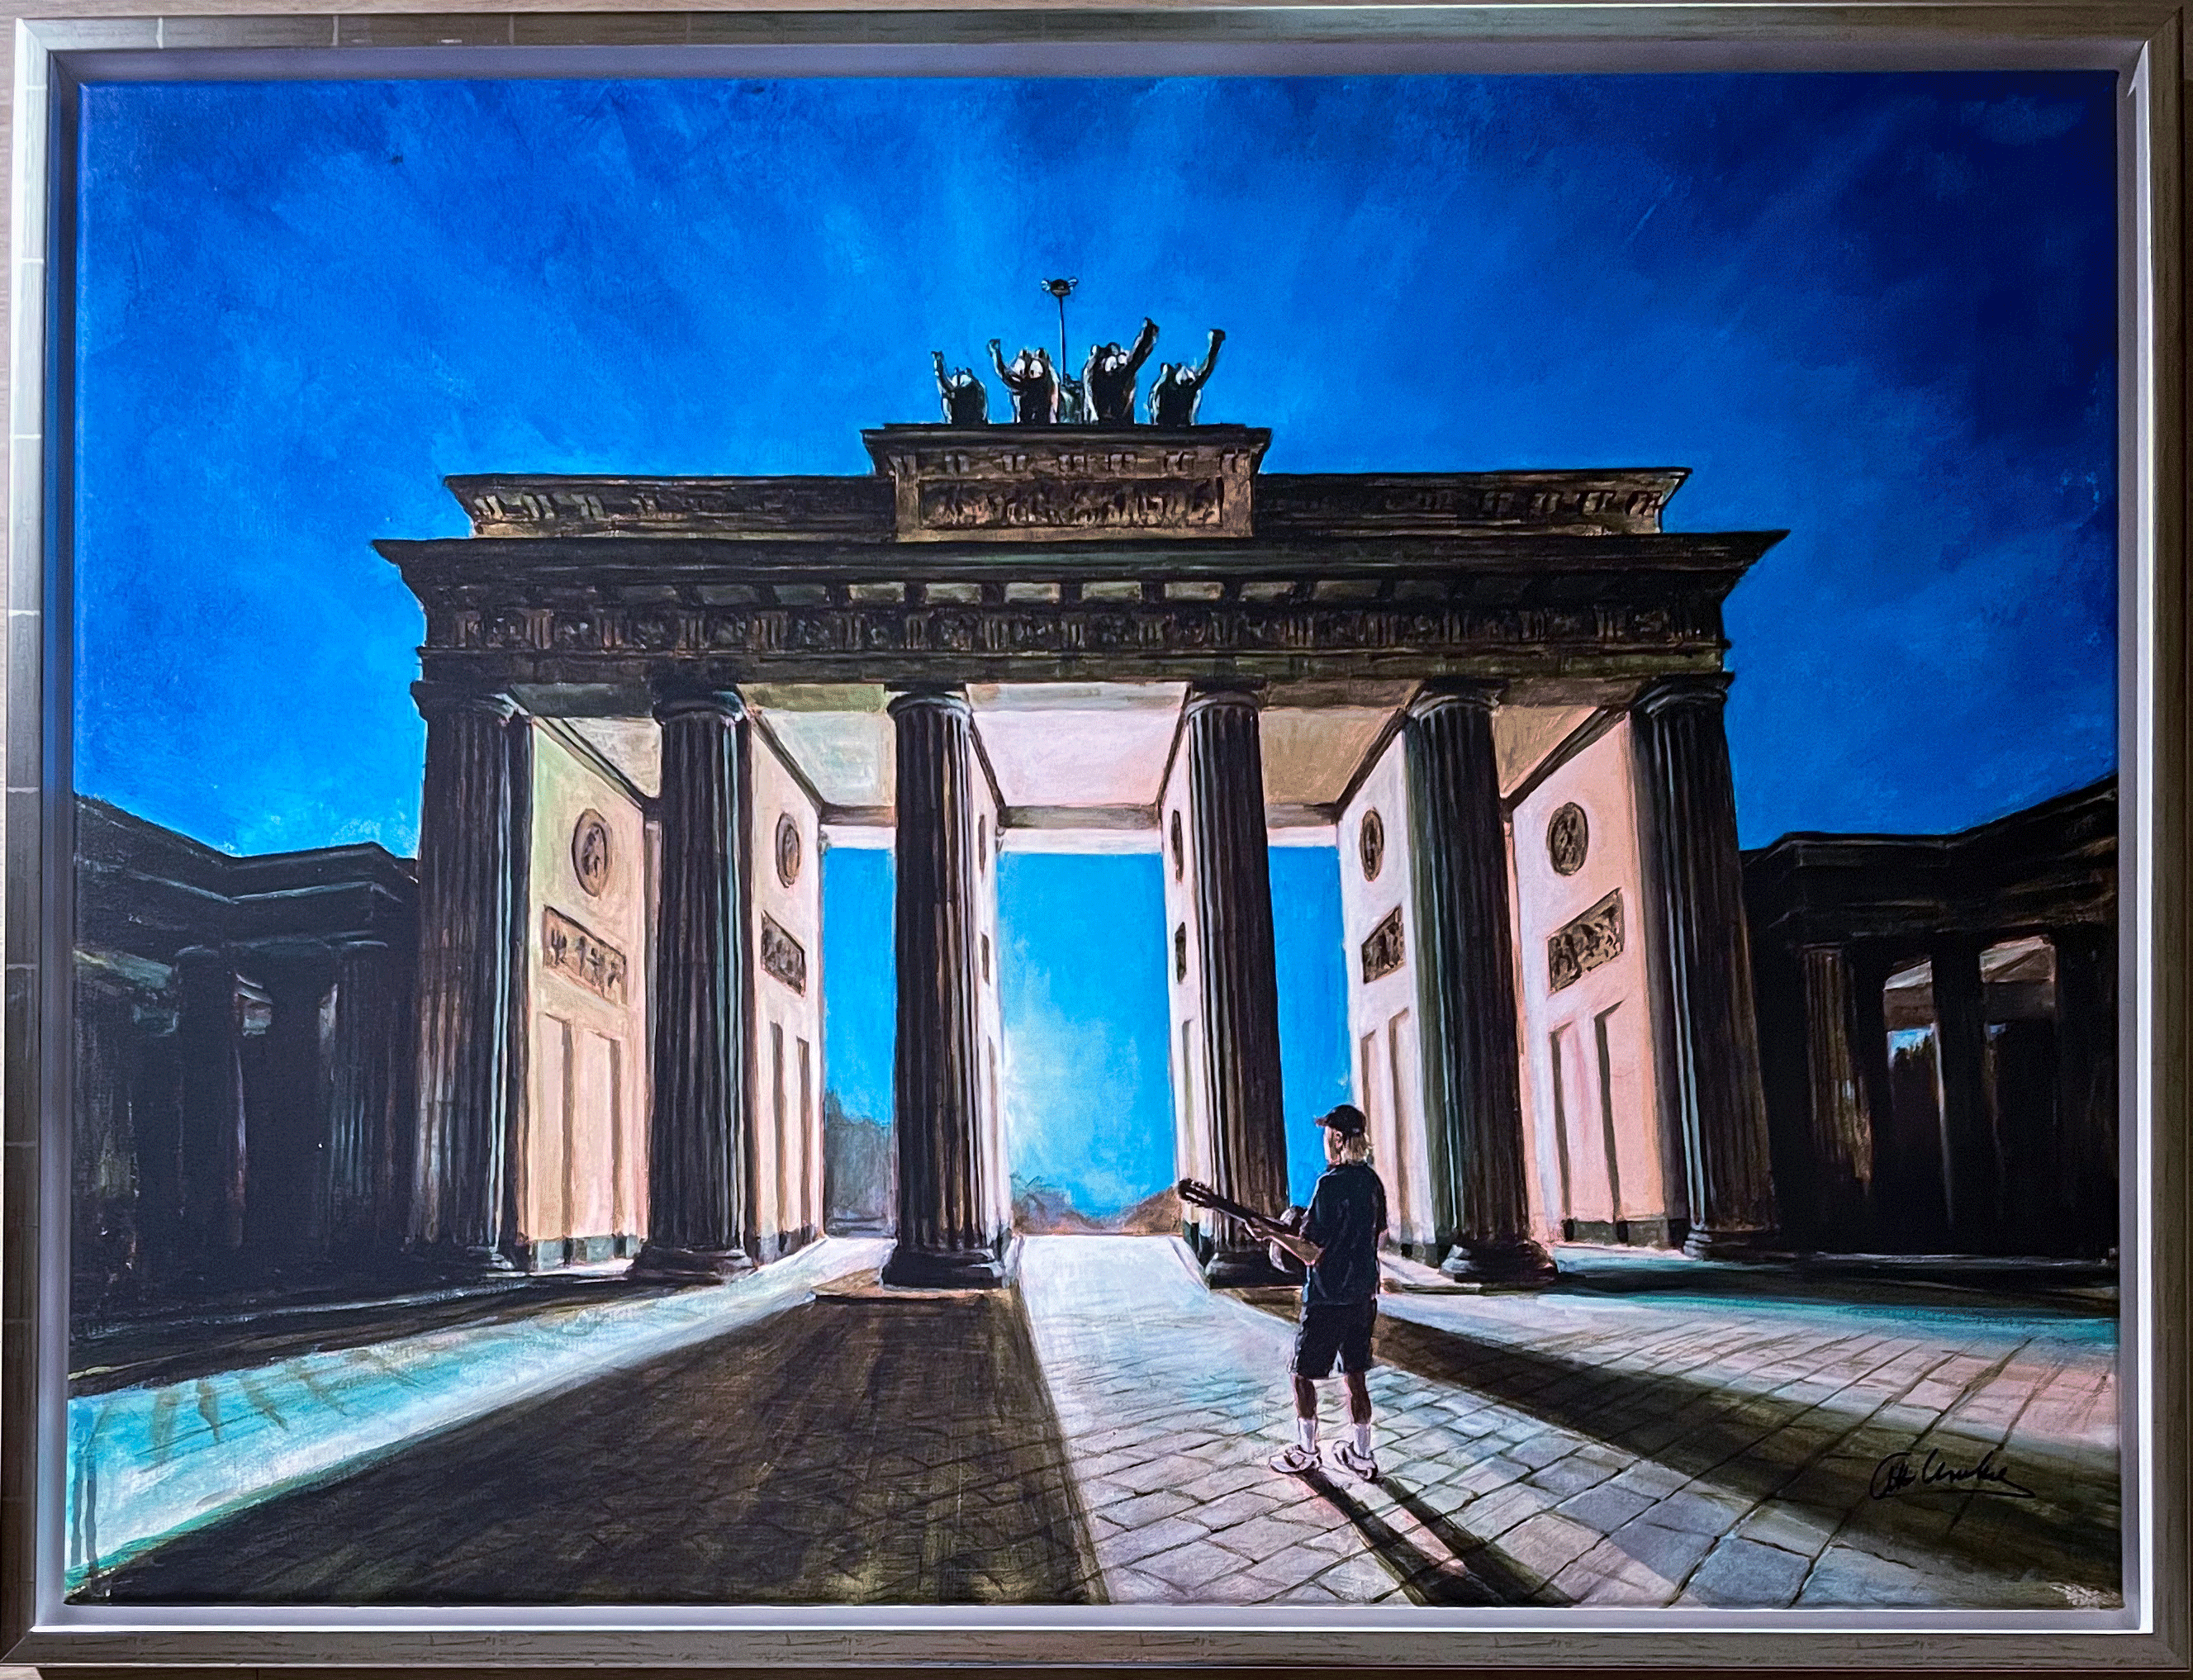 Otto Waalkes "One Morning in Berlin"